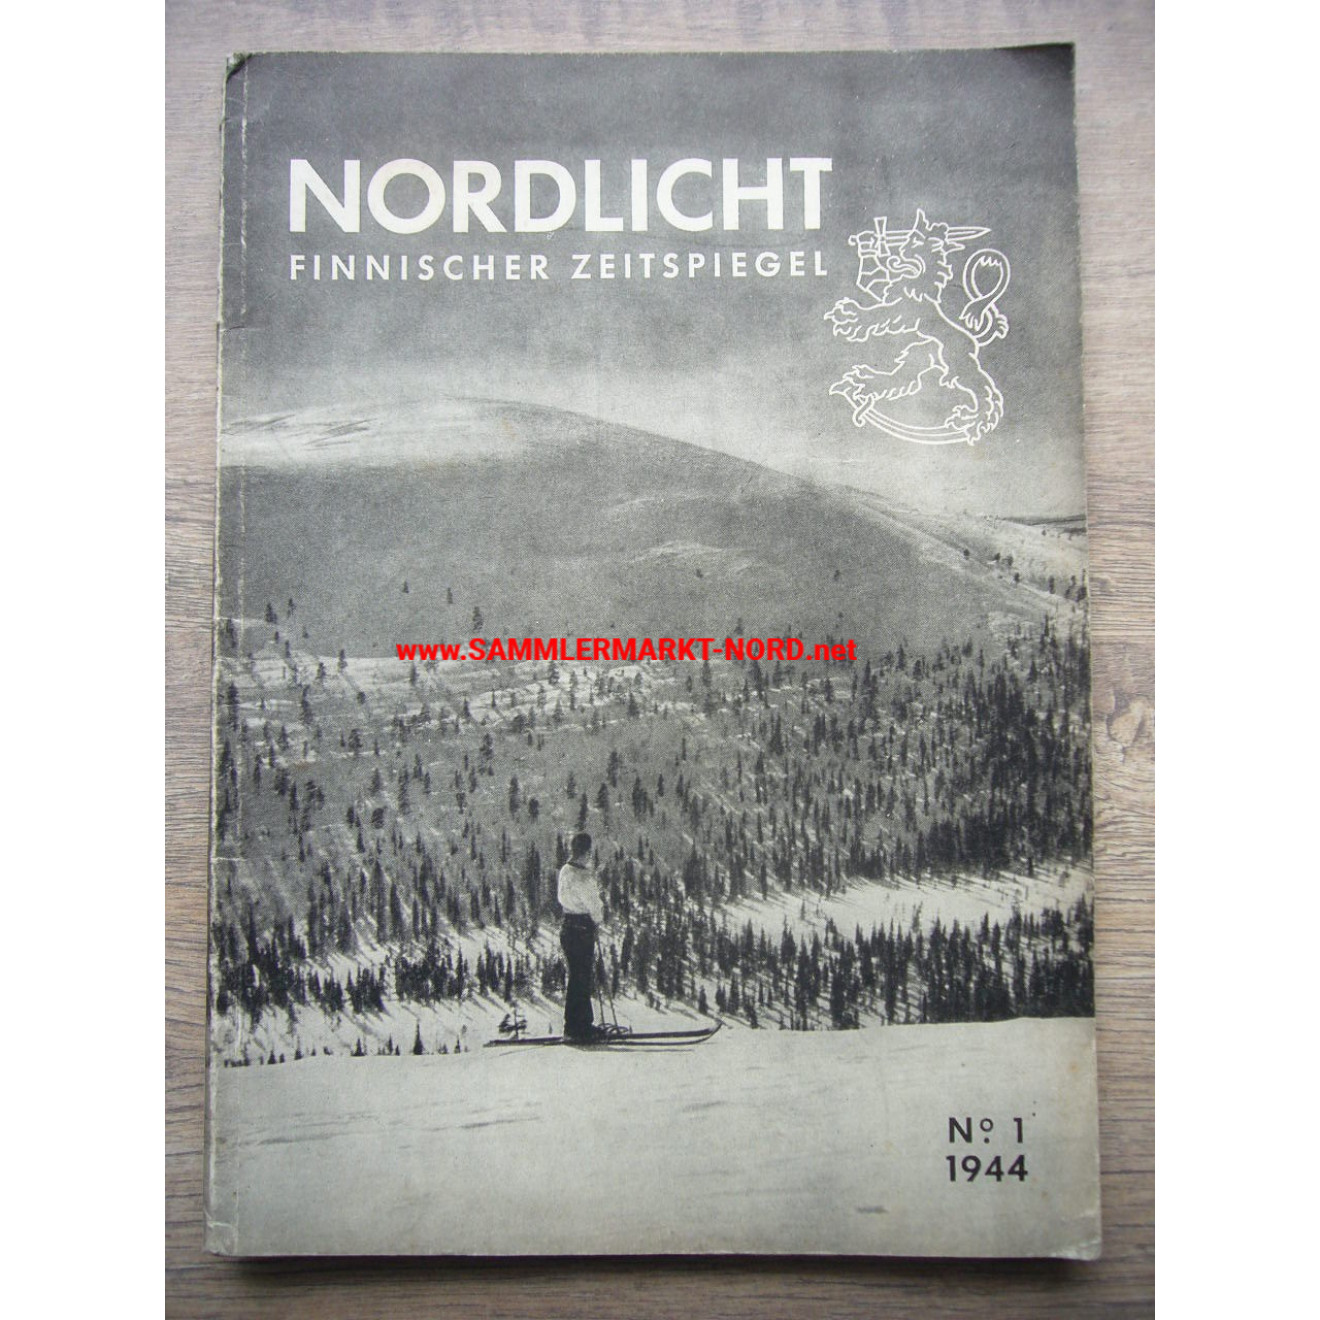 Northern Lights - Finnish Time Mirror - No. 1 / 1944